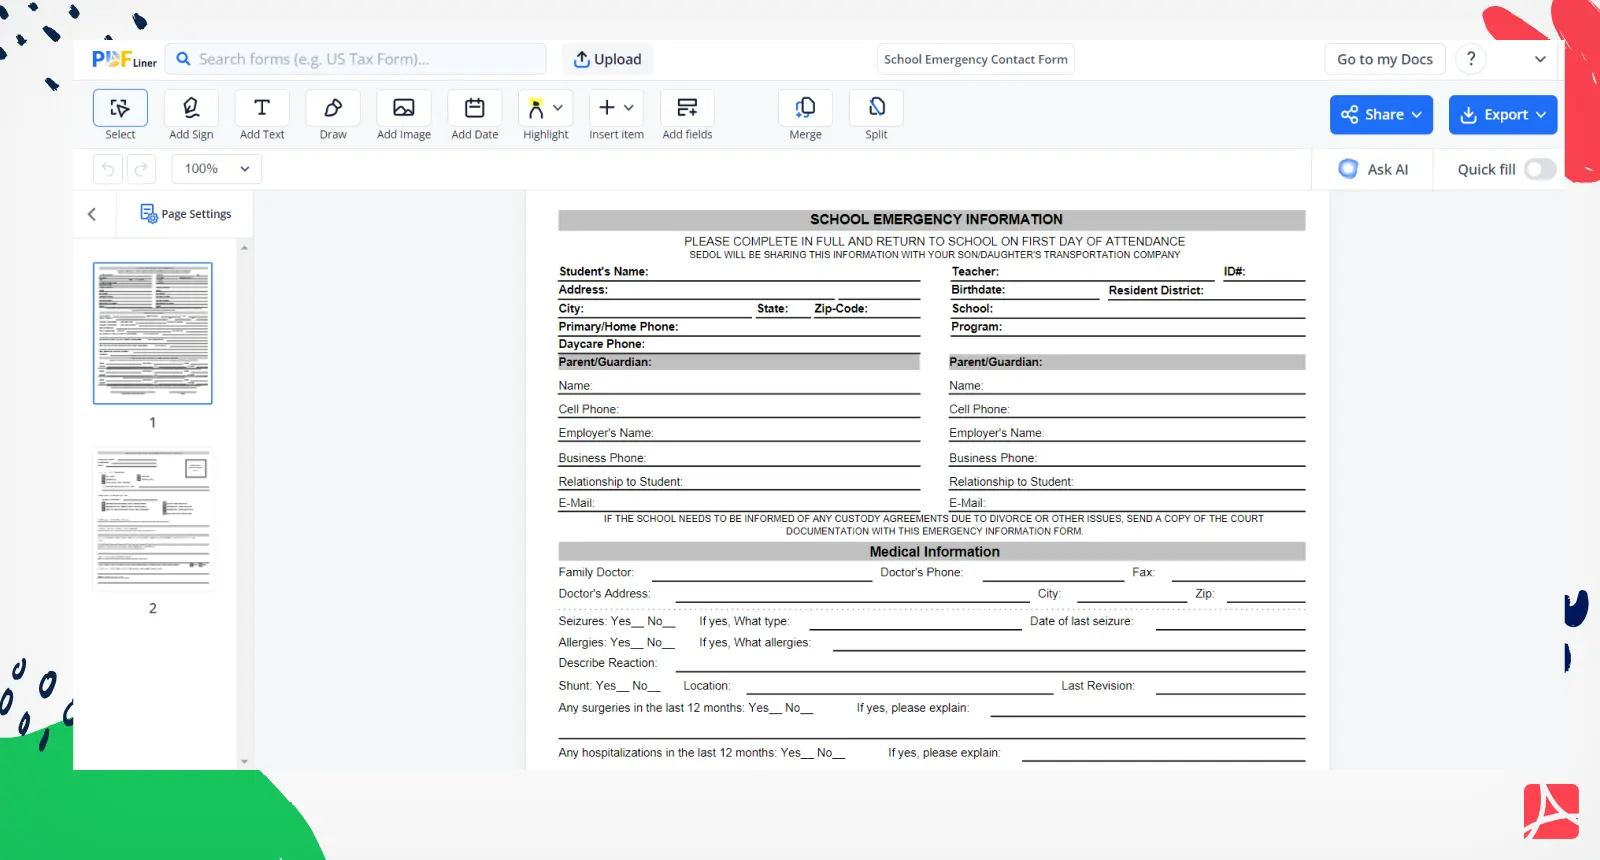 School Emergency Contact Form Screenshot